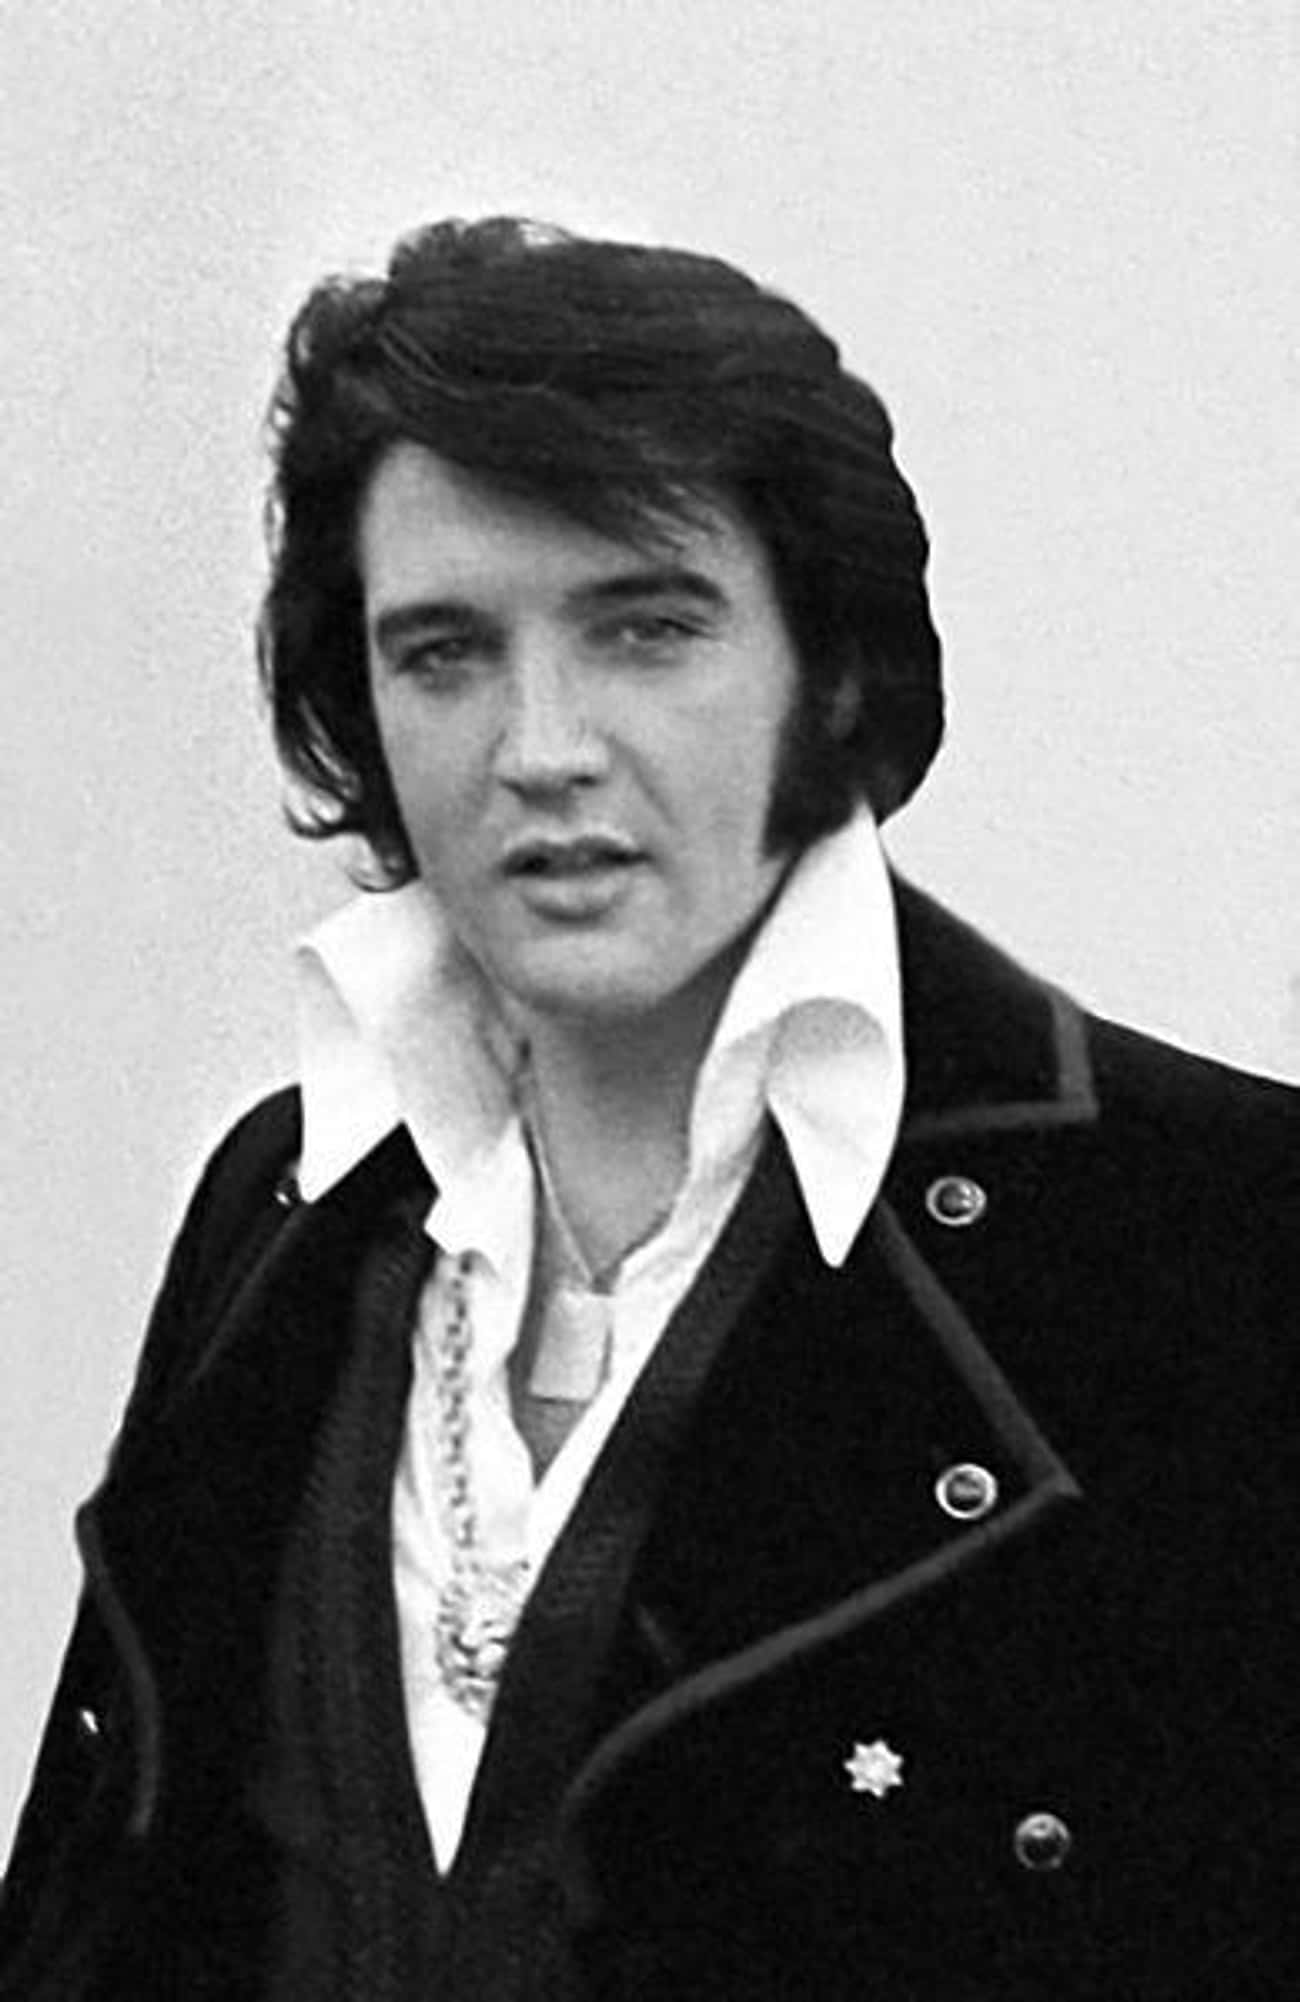 Elvis Presley Had An Overdose In His Graceland Mansion